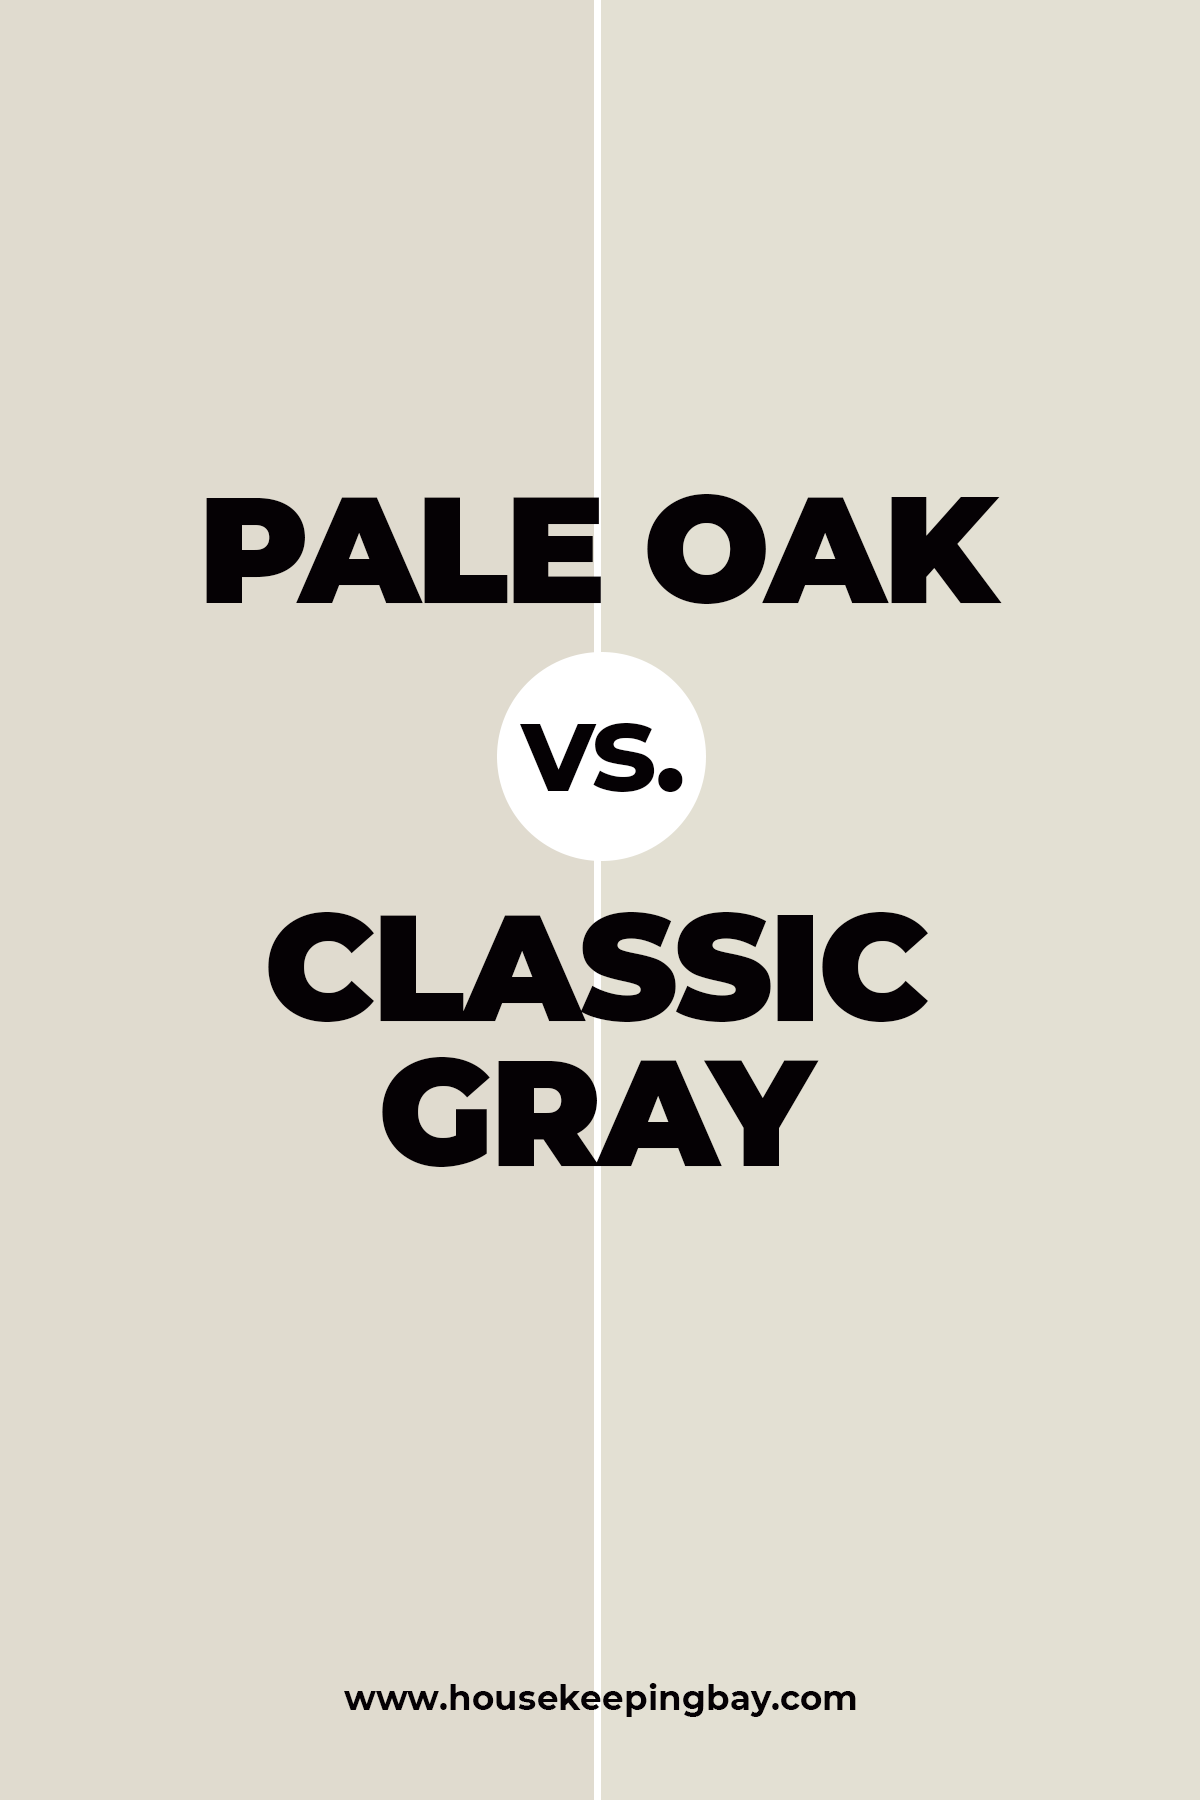 Pale Oak vs. Classic Gray